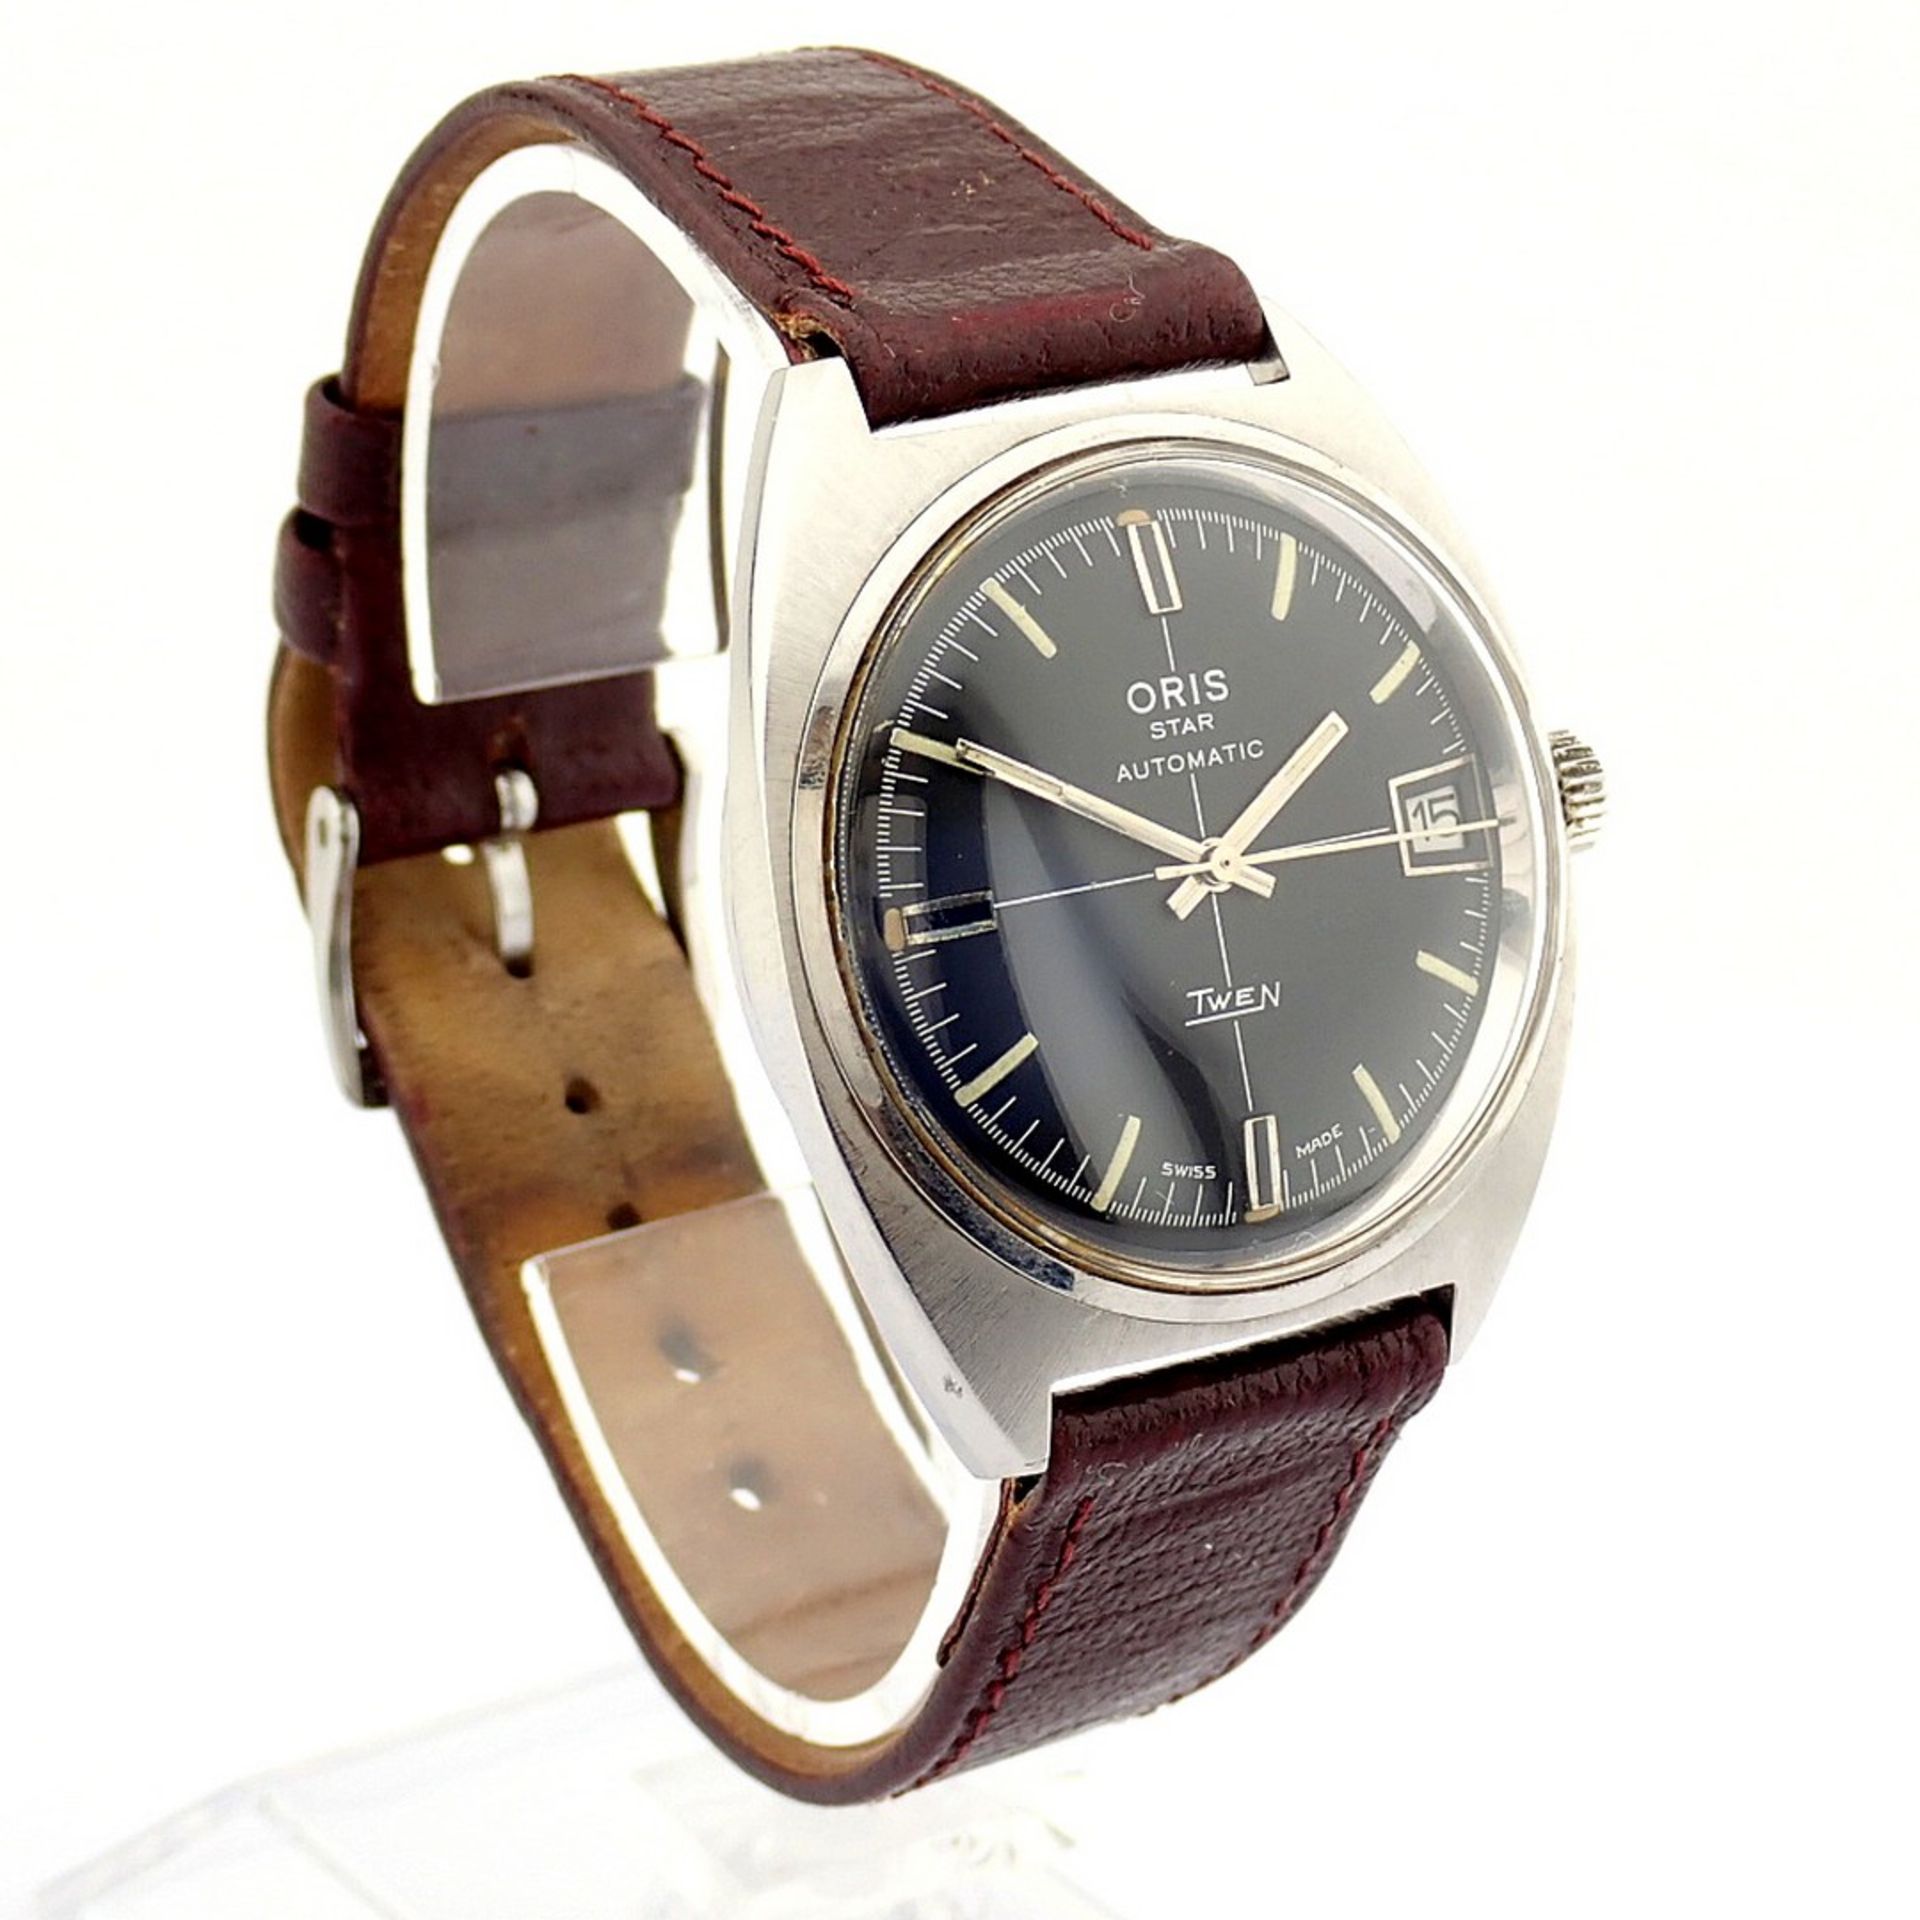 Oris / Oris Star Automatic Twen - Gentlemen's Steel Wrist Watch - Image 4 of 10